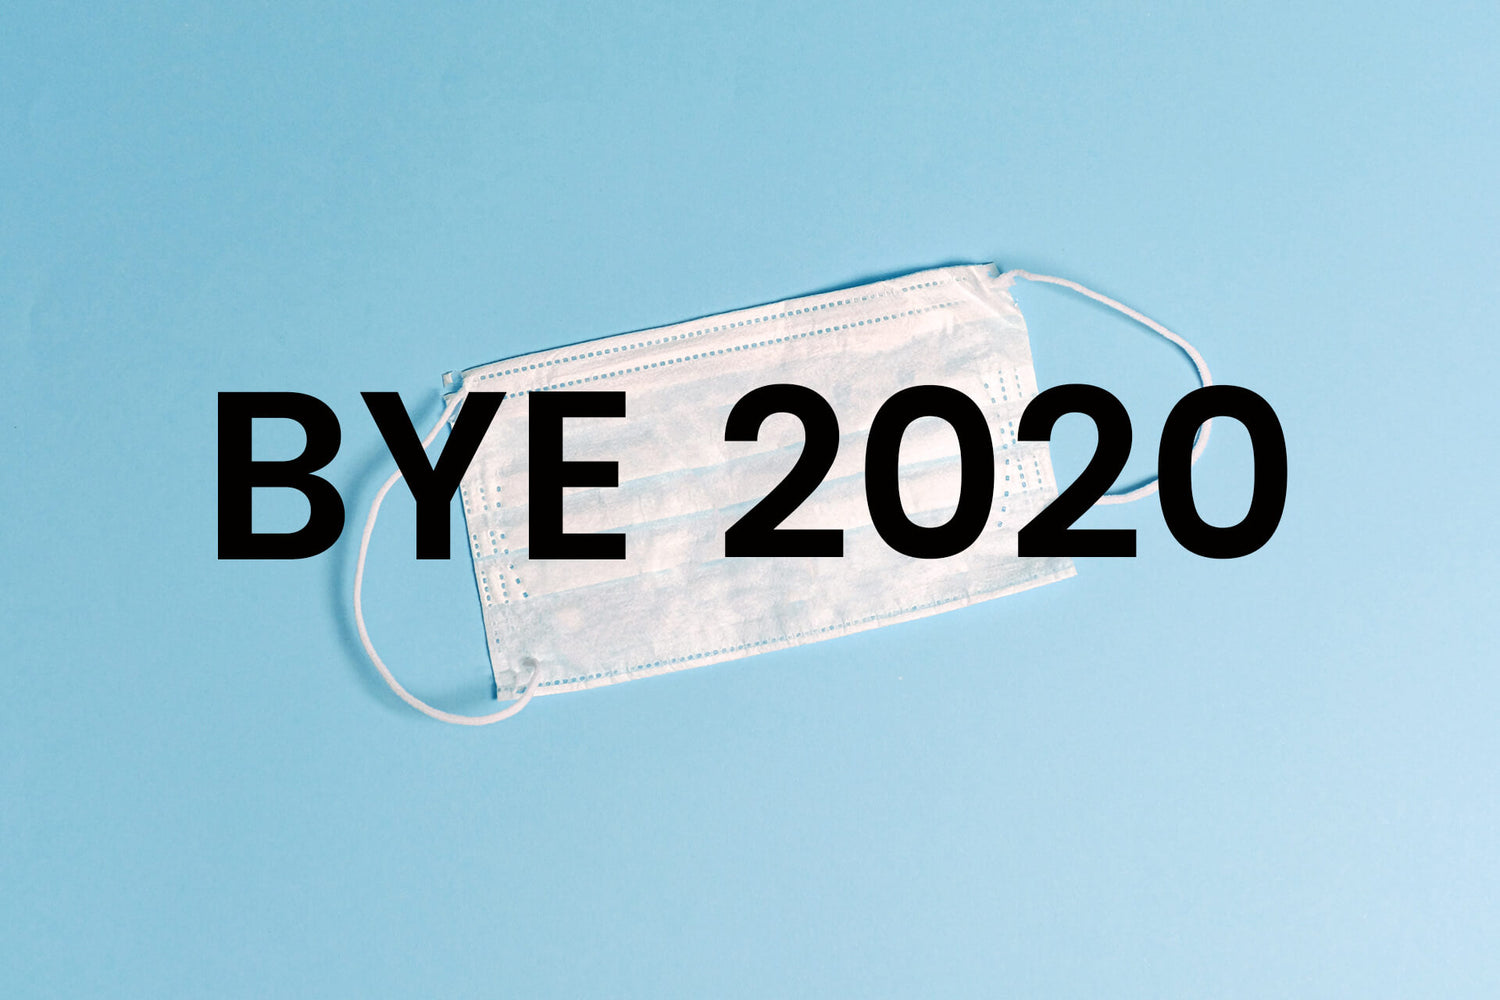 GOODBYE 2020 - WE WON‘T MISS YOU